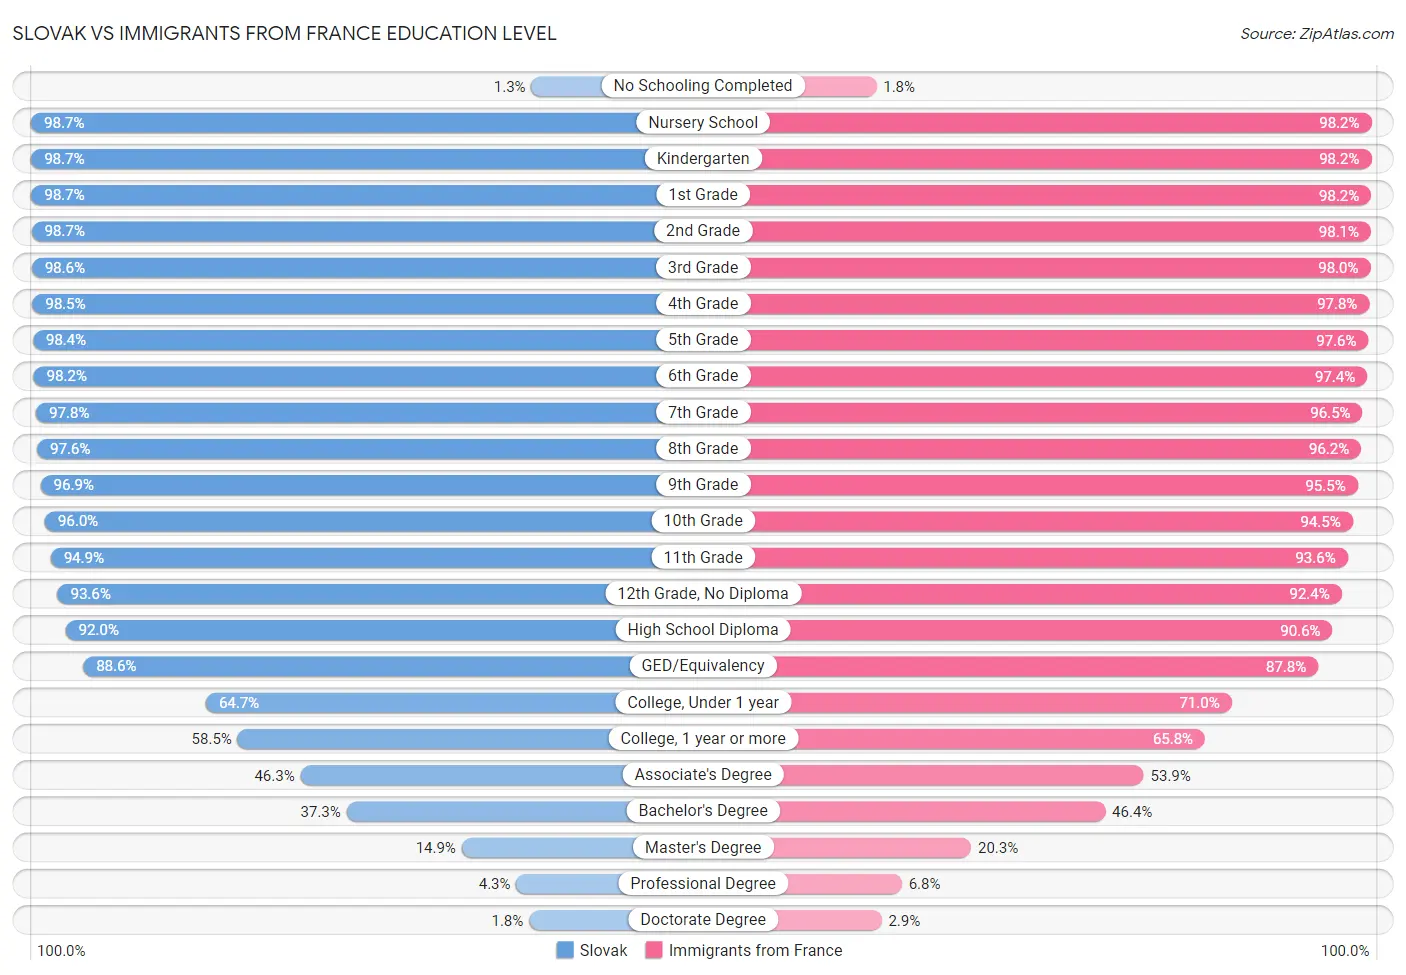 Slovak vs Immigrants from France Education Level